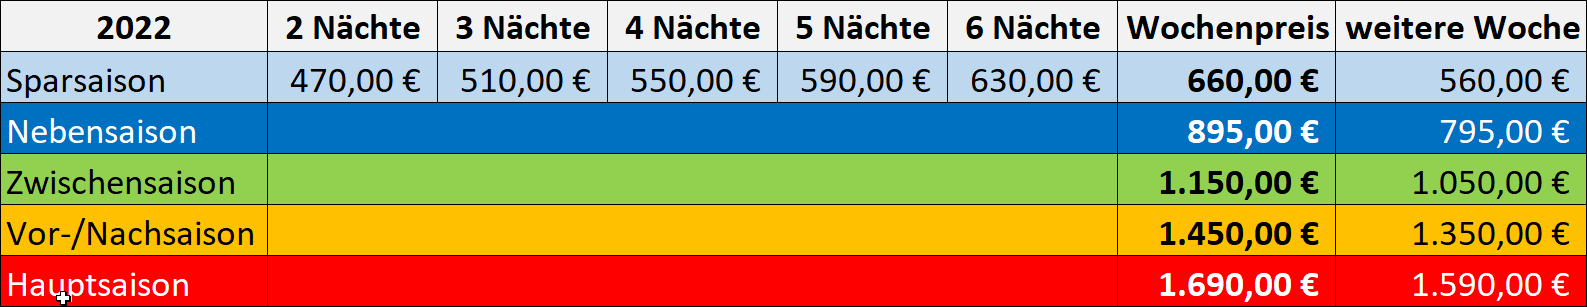 Grafik mit Preisen